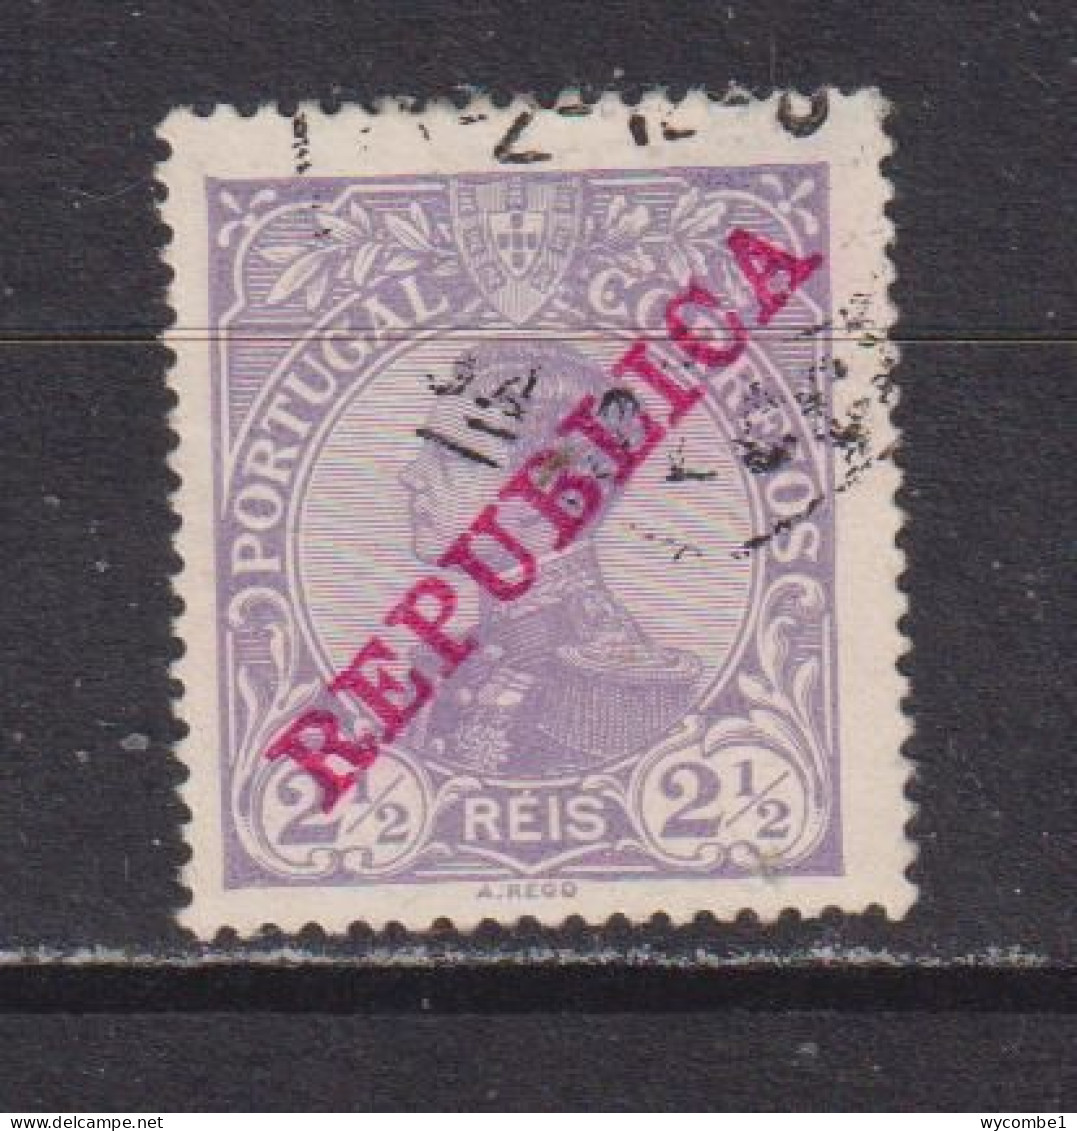 PORTUGAL - 1910 Republica  21/2r  Used As Scan - Usado